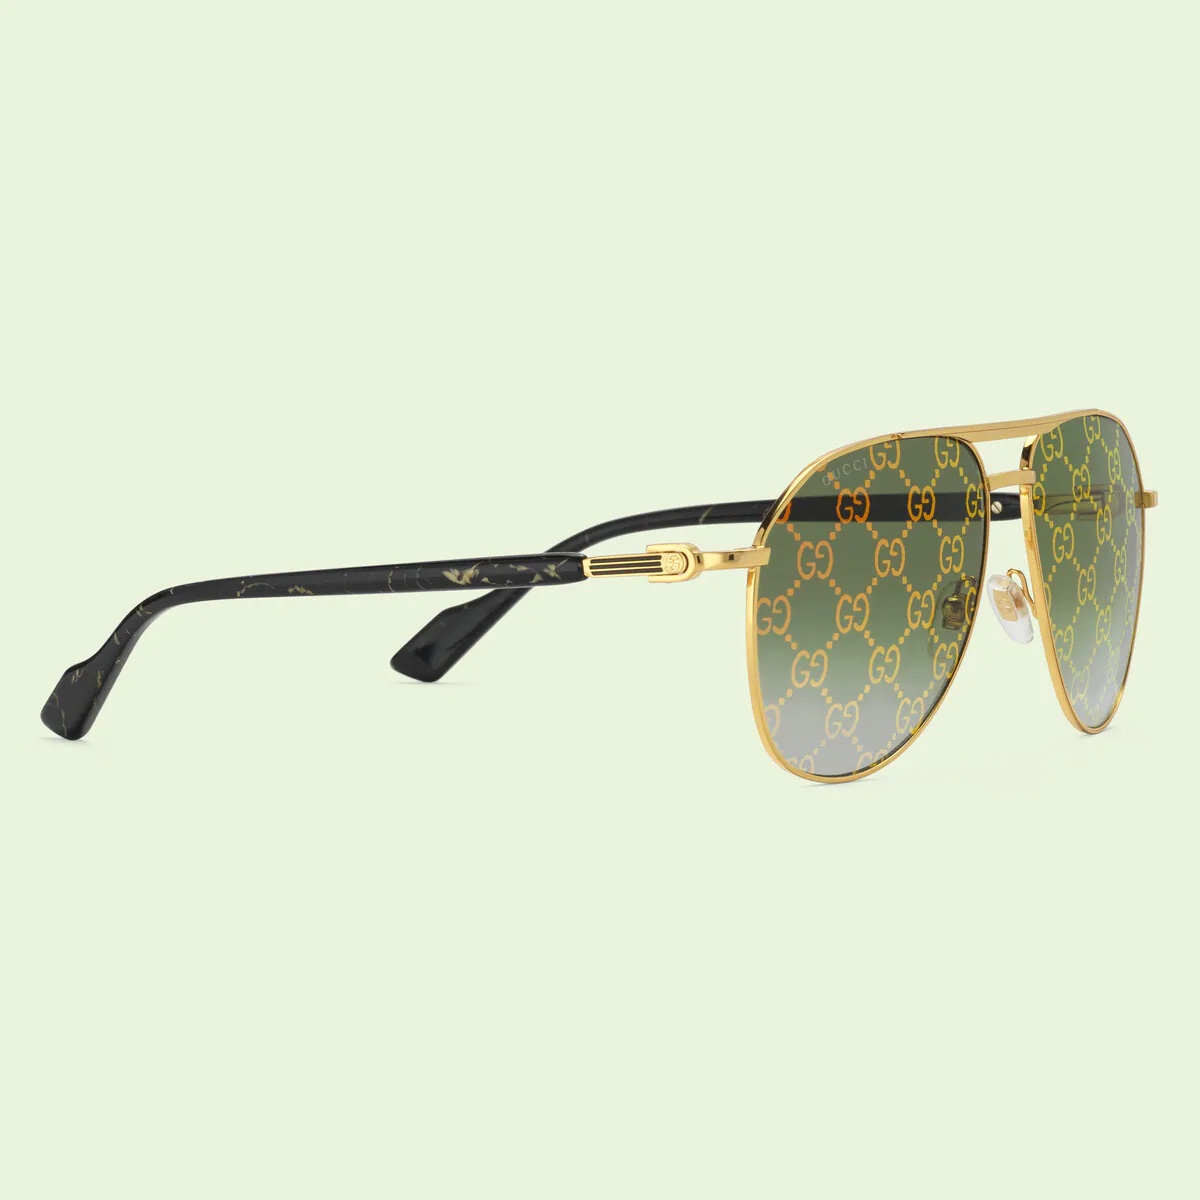 Aviator frame sunglasses - 2